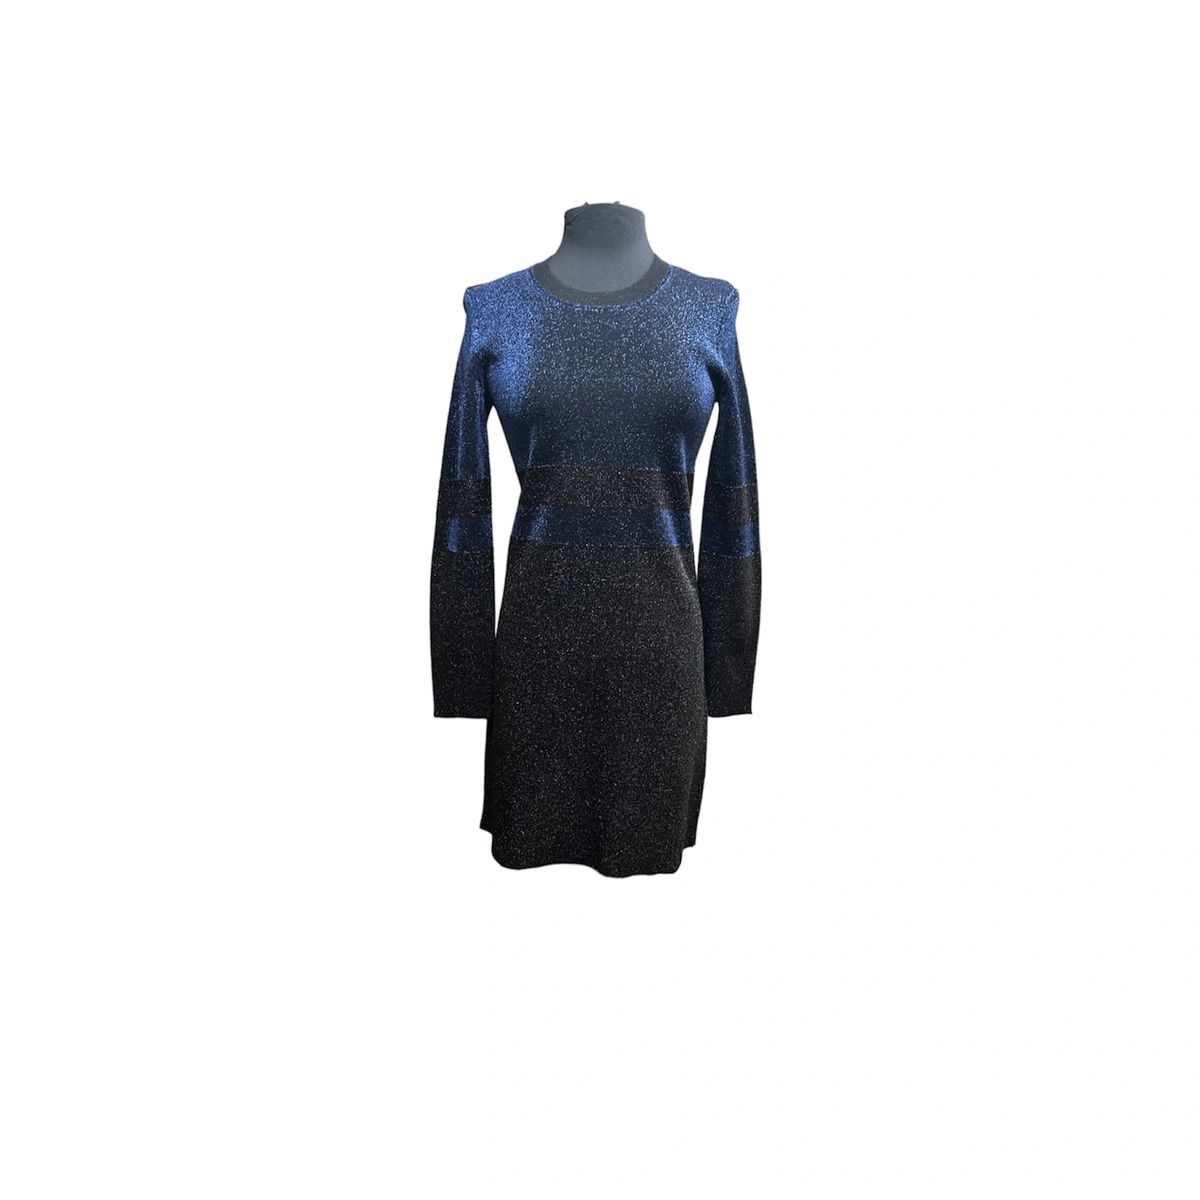 Tory Burch Long Sleeve Black/Blue Dress - Size Small